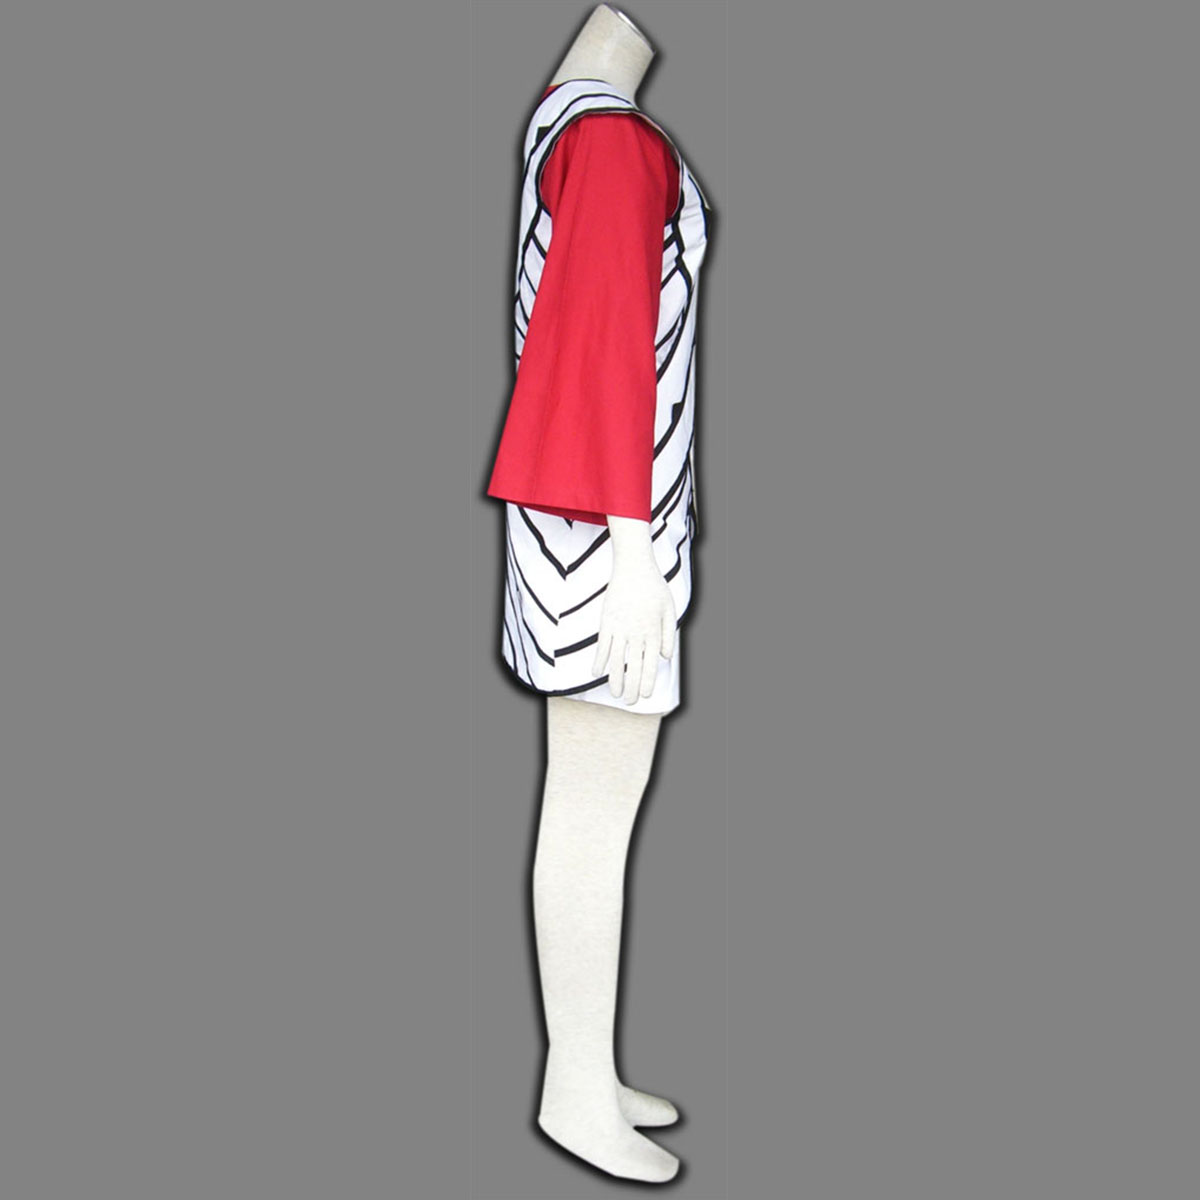 Naruto Kurenai Yuhi 1 Anime Cosplay Costumes Outfit